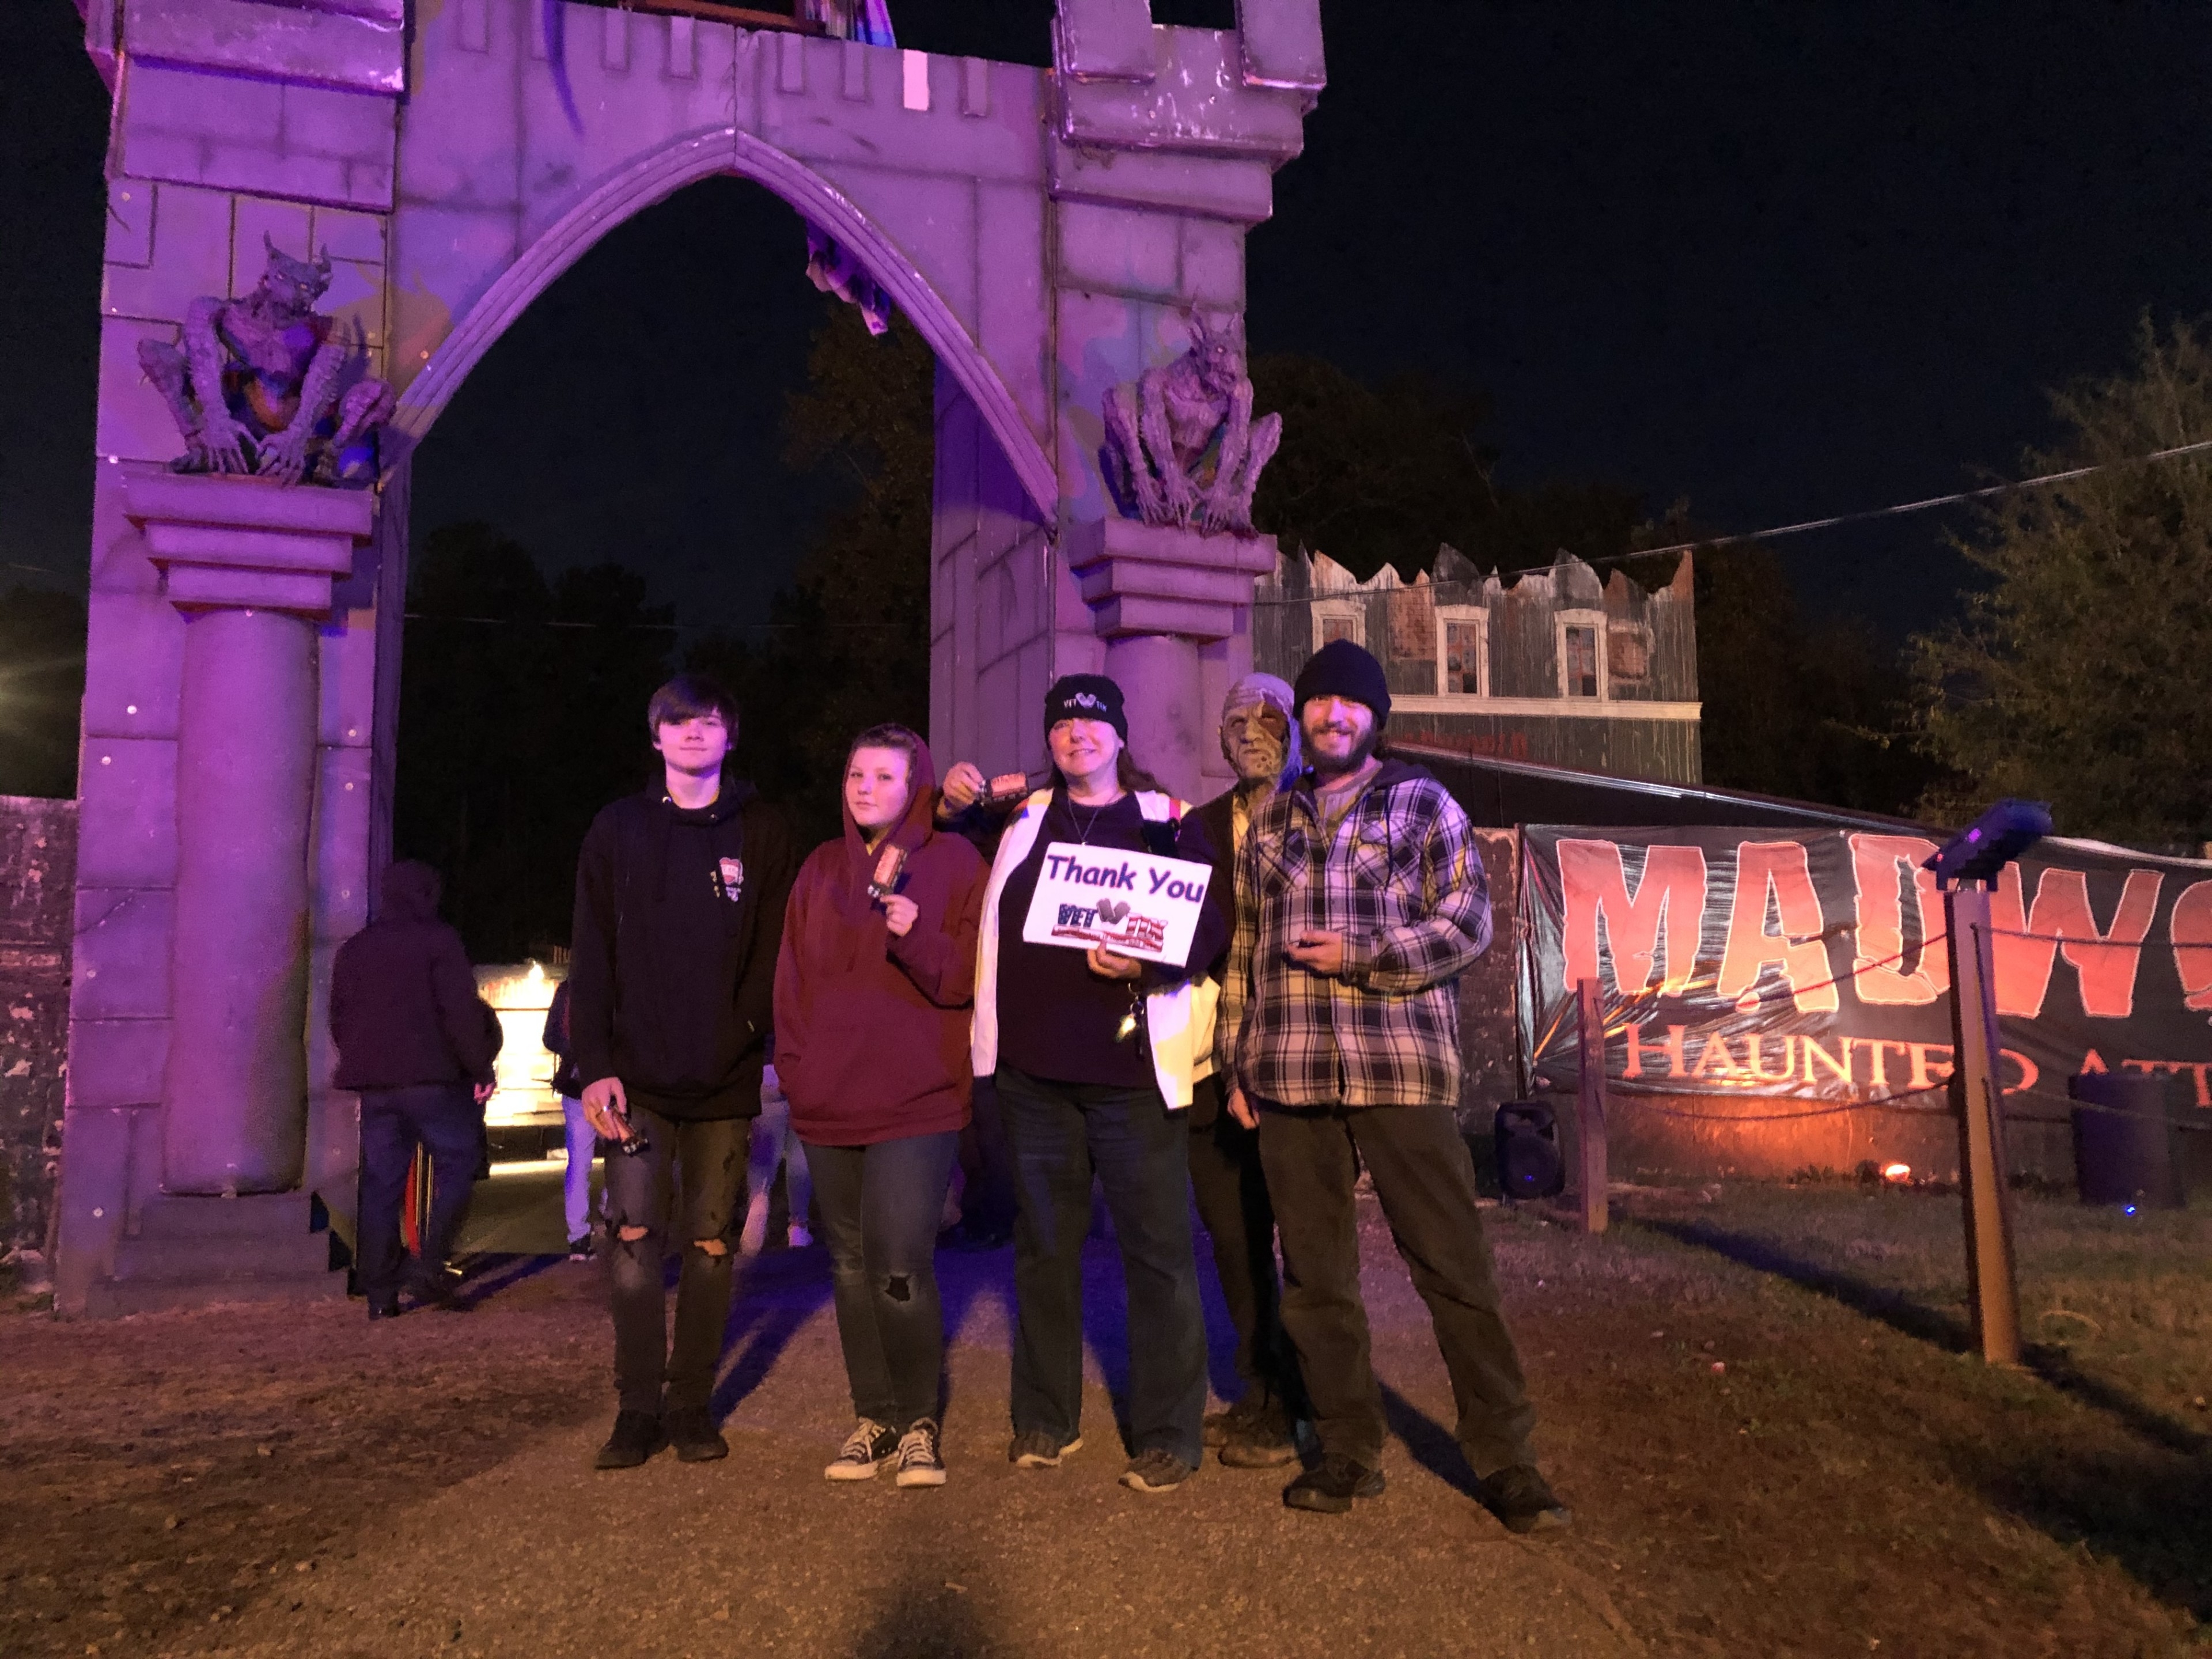 Krampus - Madworld Haunted Attractions